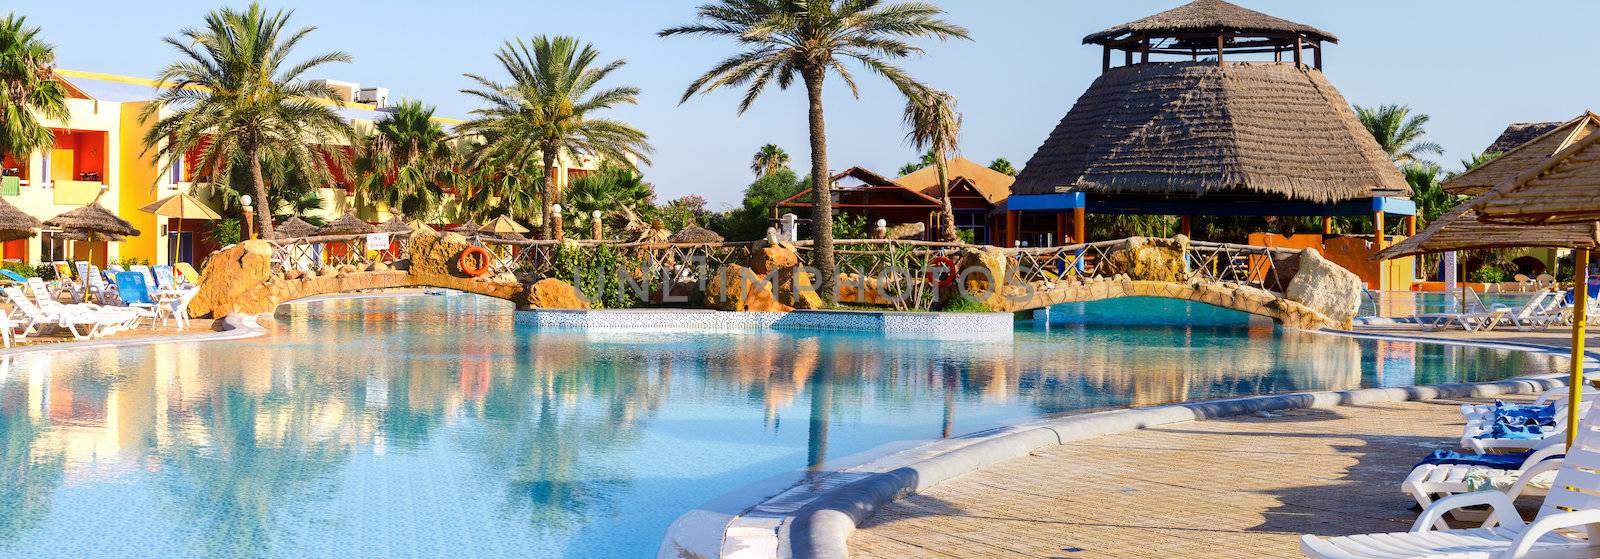 sun lounger on swimming pool with nobody in tunisian ressort Borj Cedria, Caribbean World